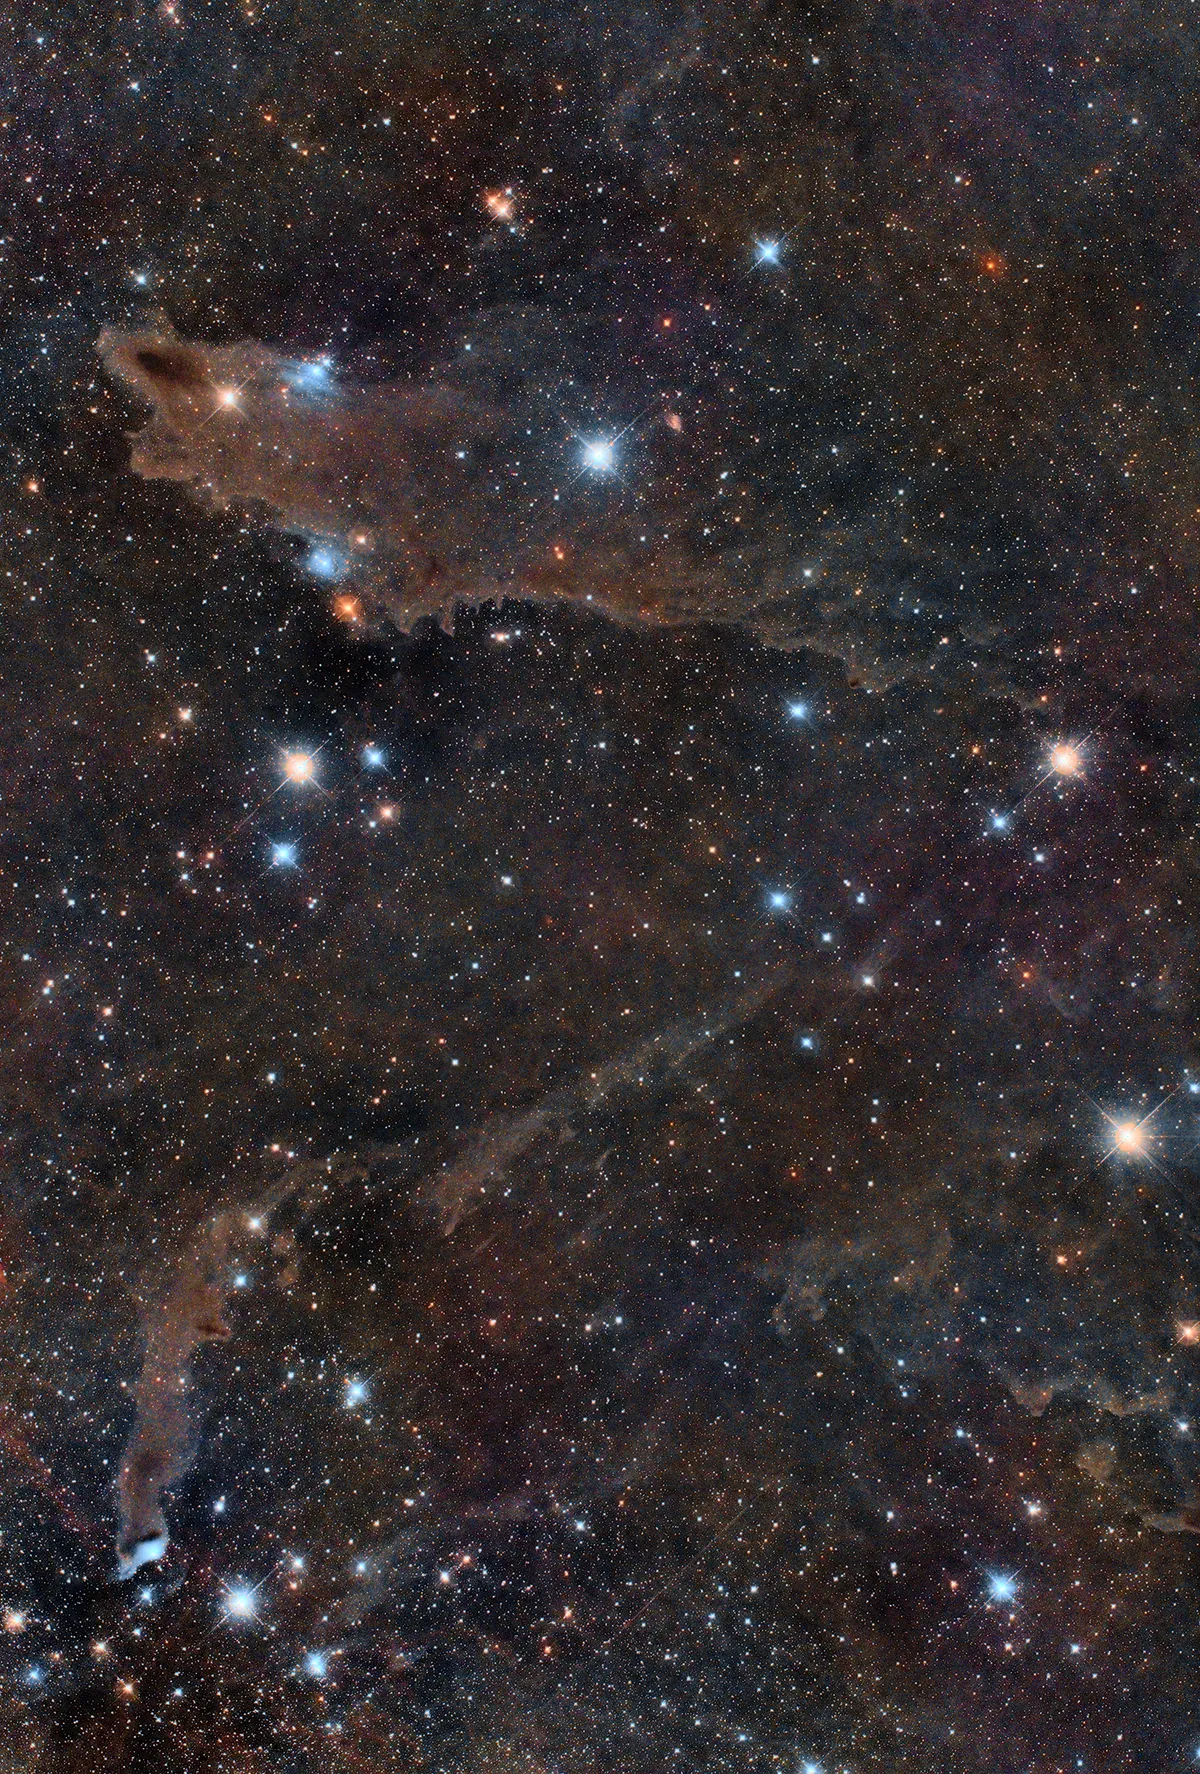 The Dark Shark Nebula Simon Todd, Haywards Heath, West Sussex, March–April 2021 Equipment: ZWO ASI 6200MC Pro colour camera, SharpStar Optics 15028HNT astrograph, Sky-Watcher EQ8 Pro mount